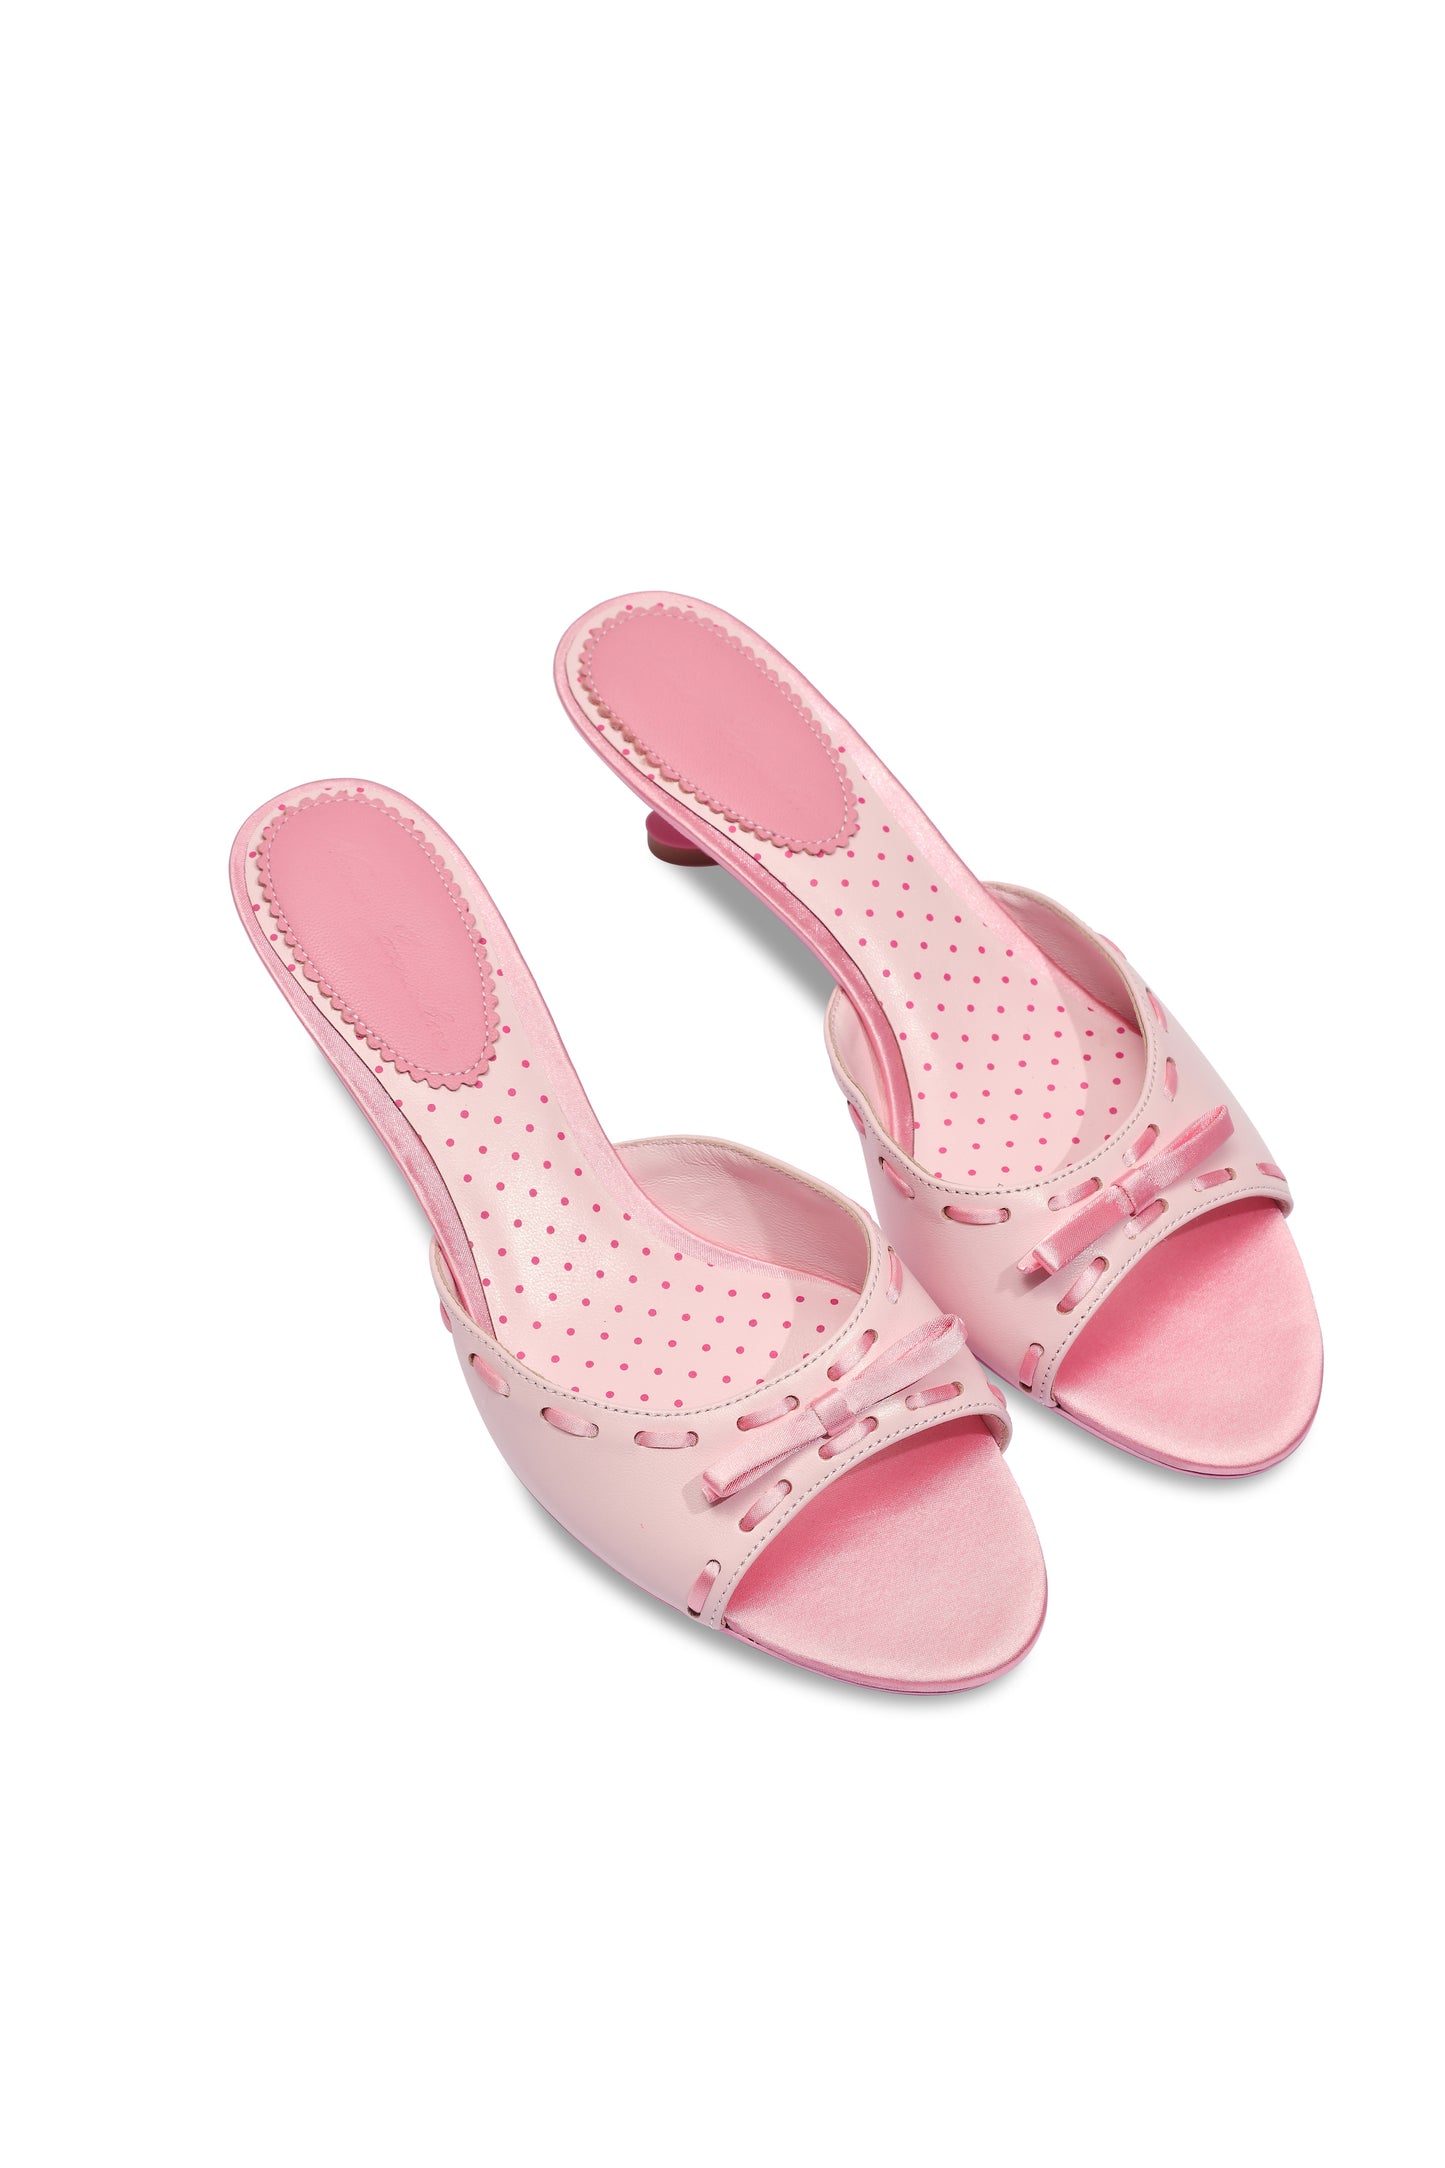 Paulina Bow Heels (Pink) (Final Sale)